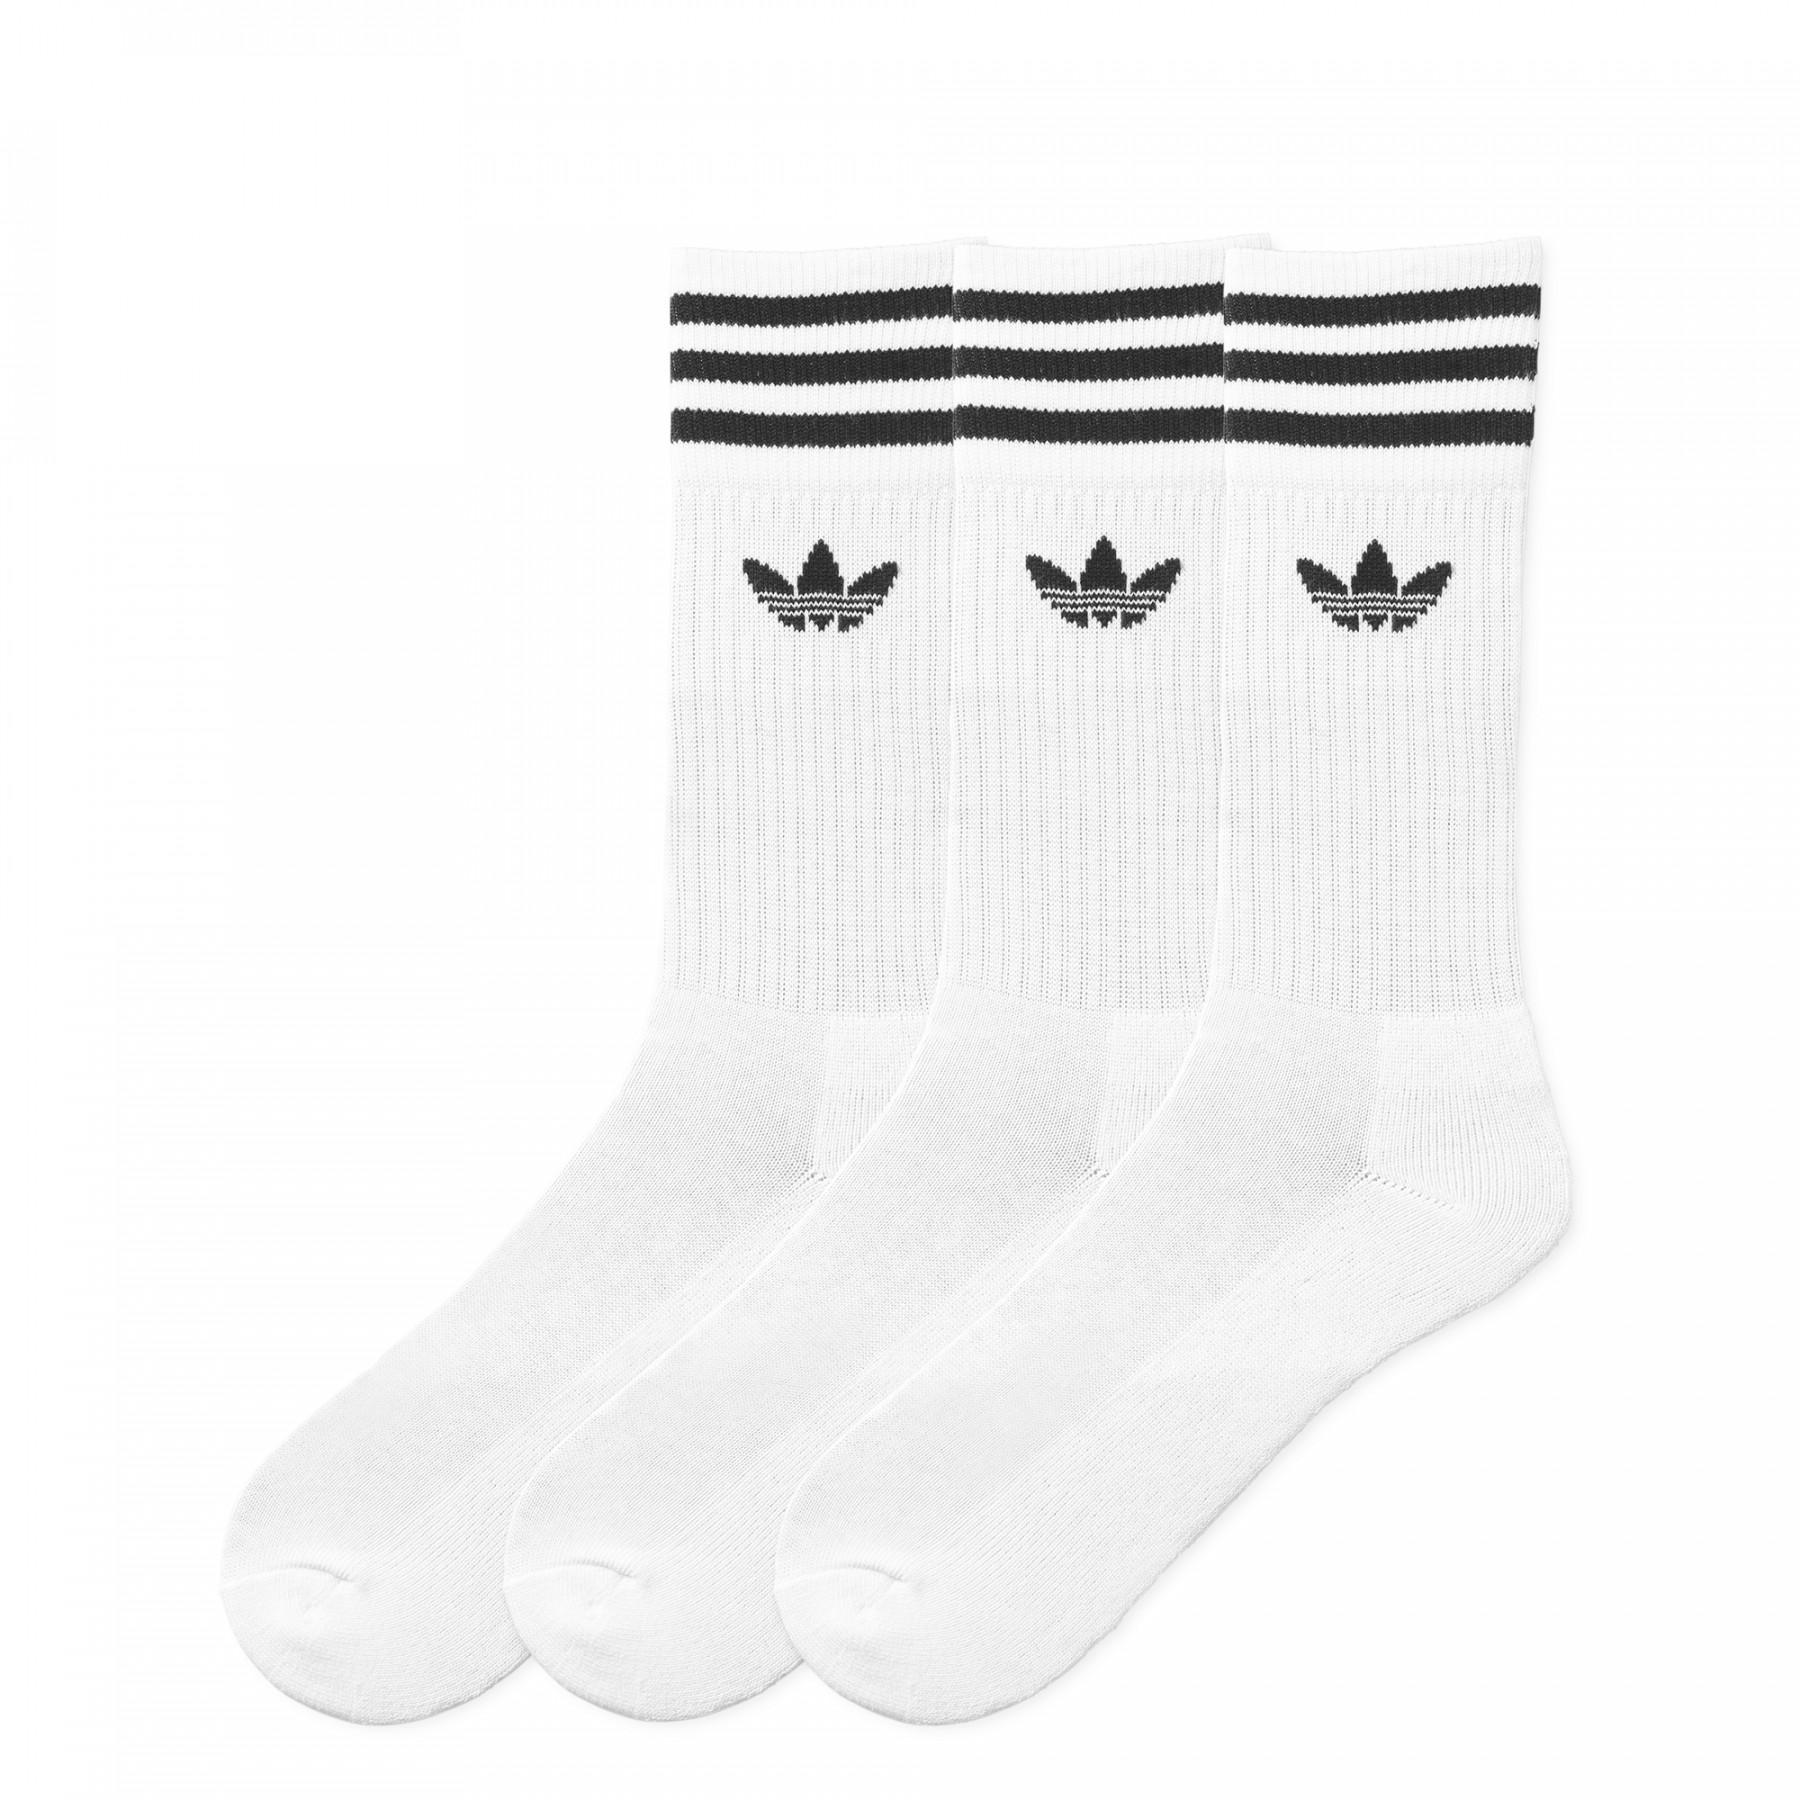 mid-calf socks adidas (3 pairs) - Socks - Handball wear